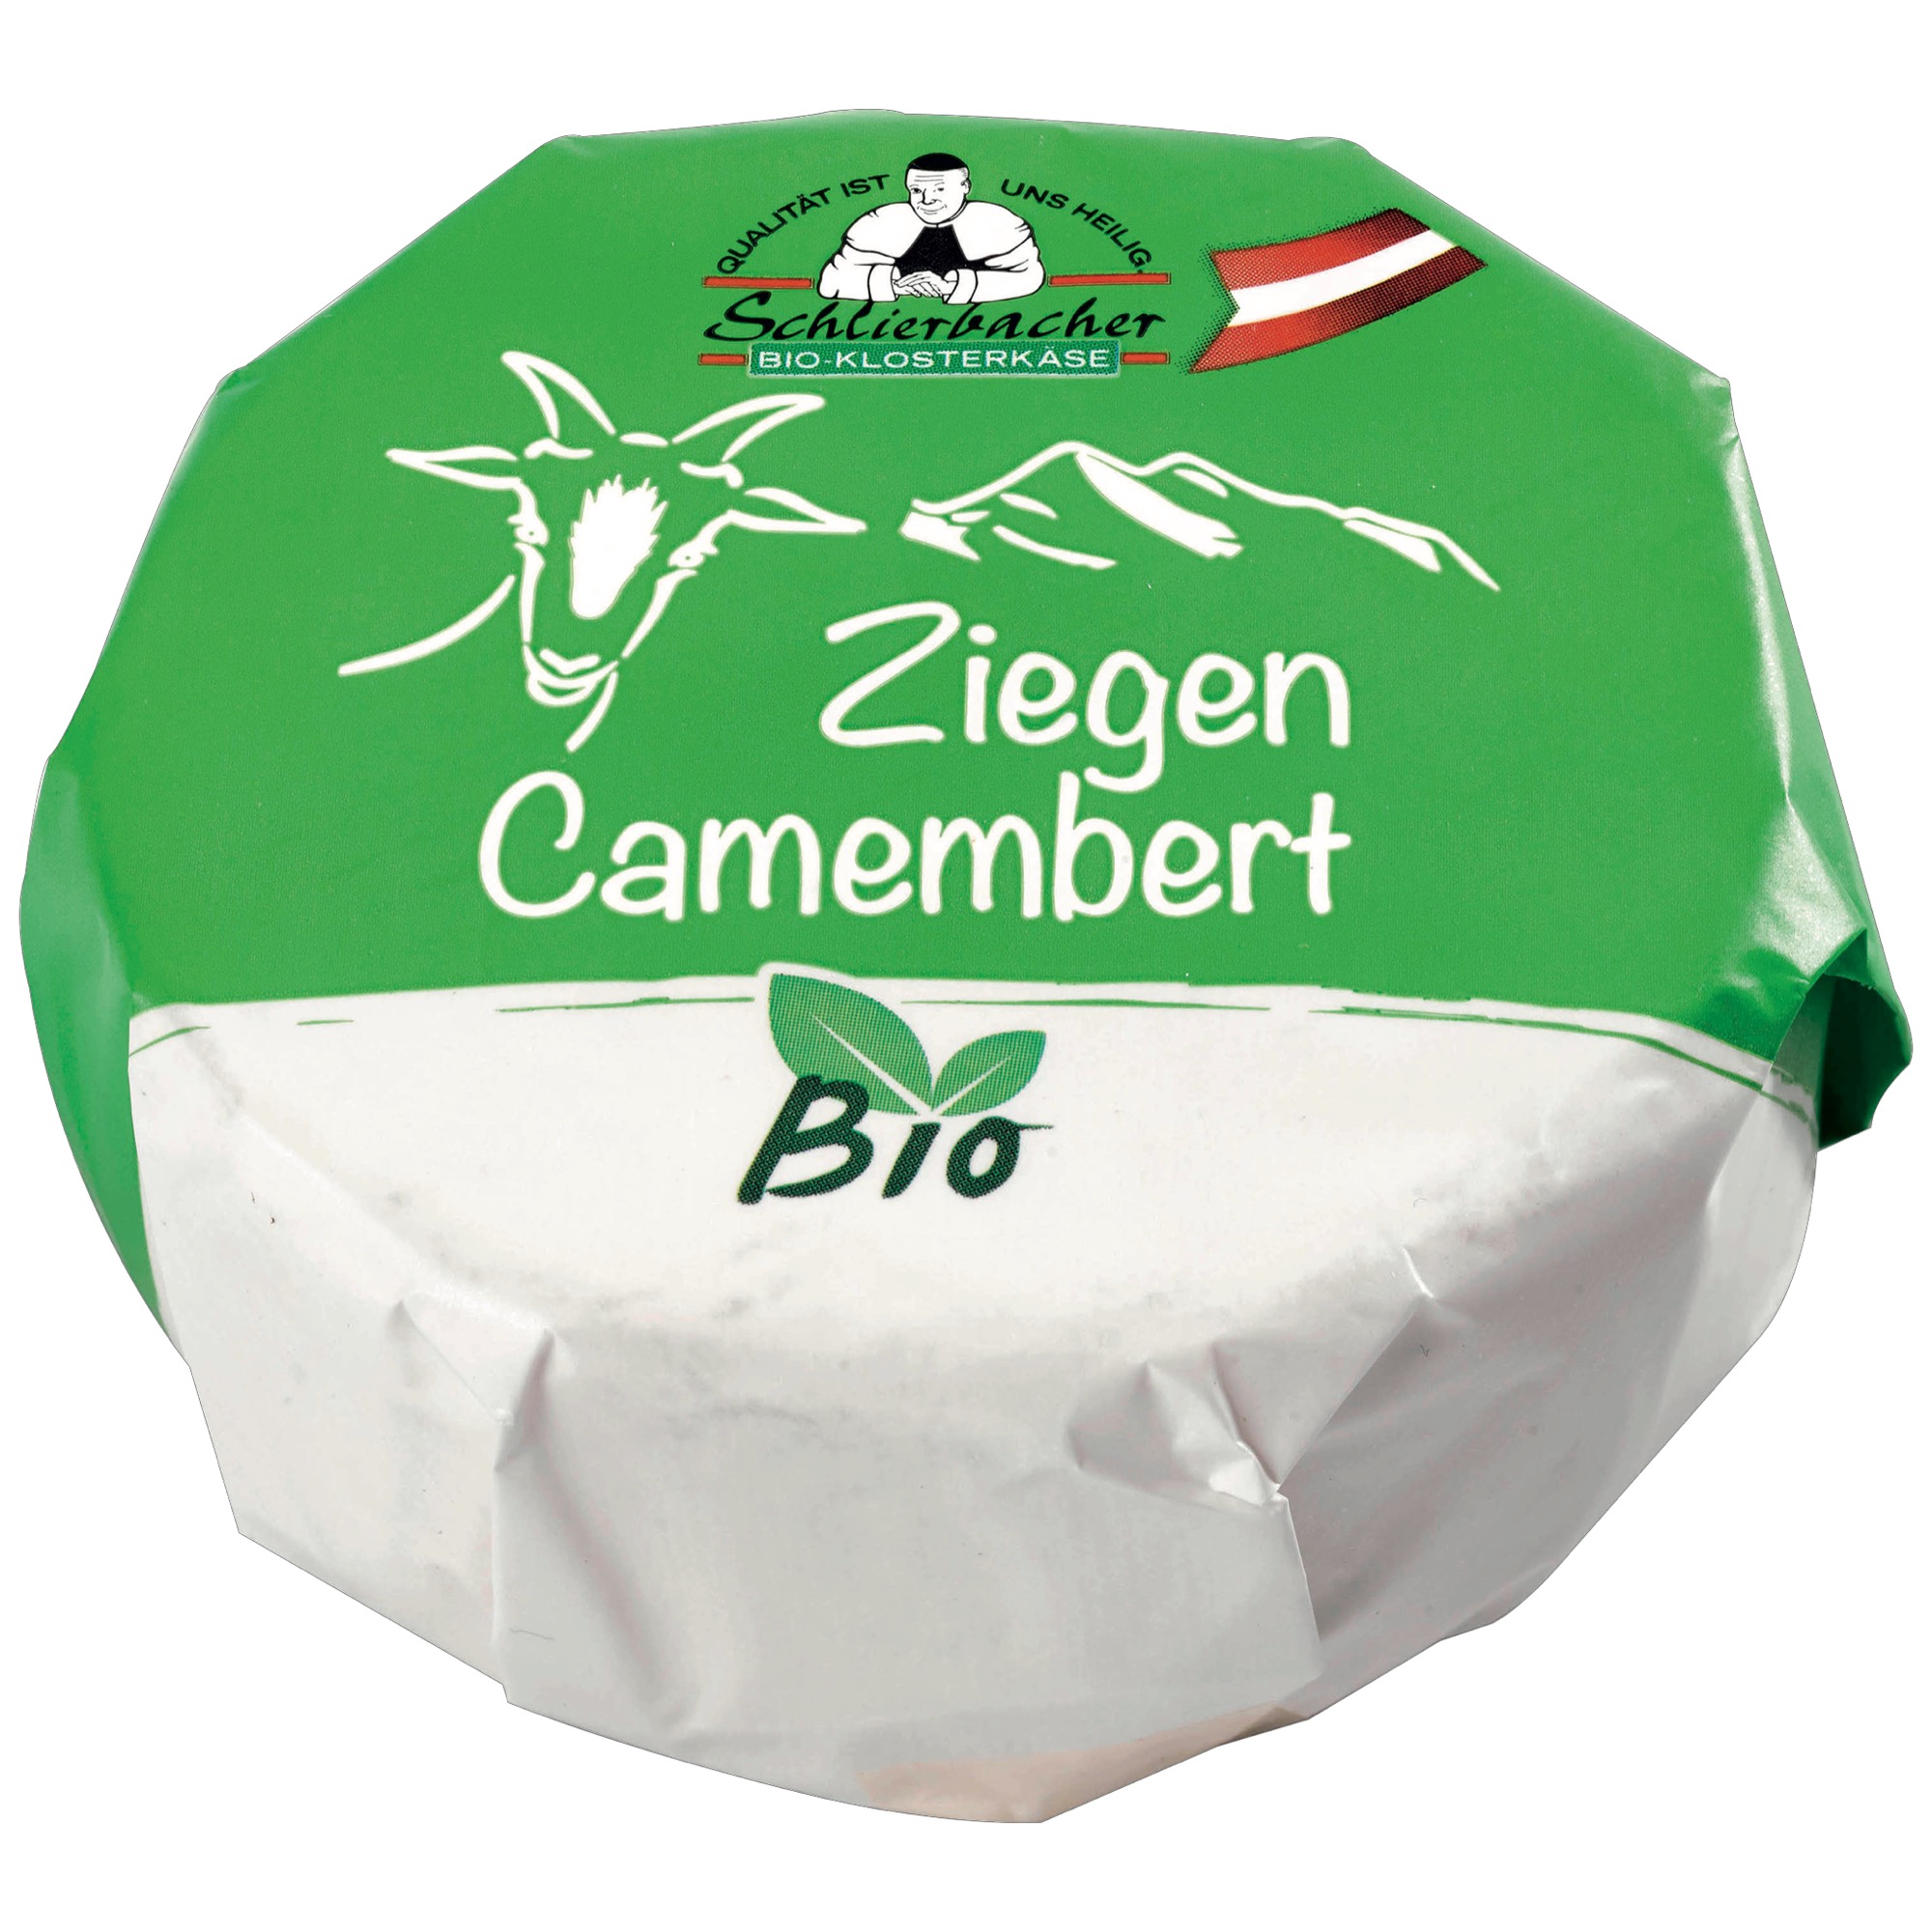 Schlierbacher bio kozí camembert 100g